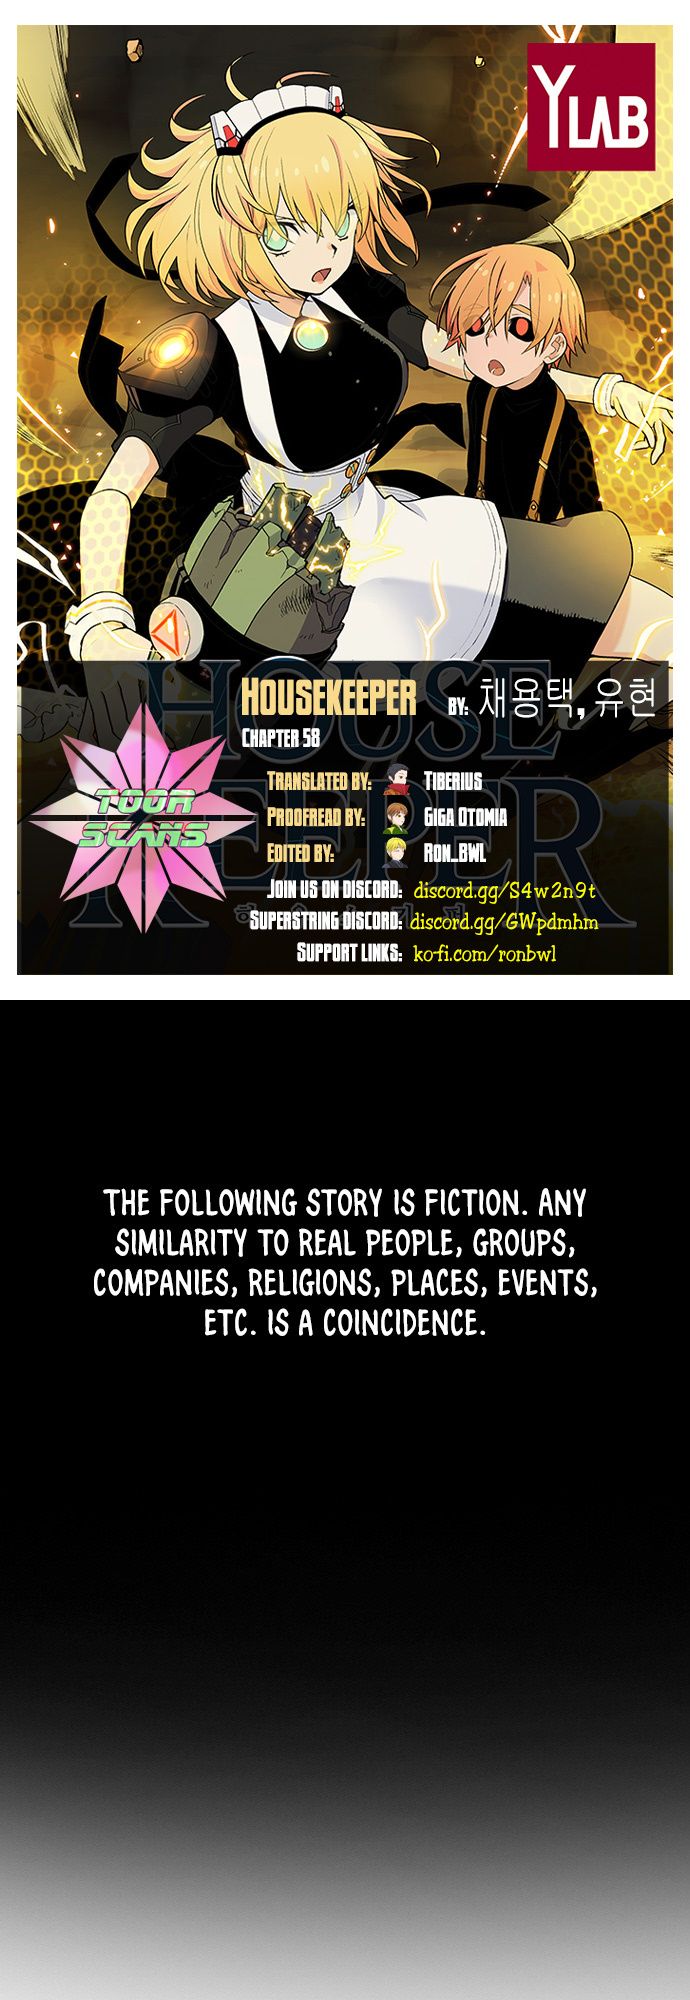 Housekeeper (Chae Yong-Taek) Chapter 58 page 1